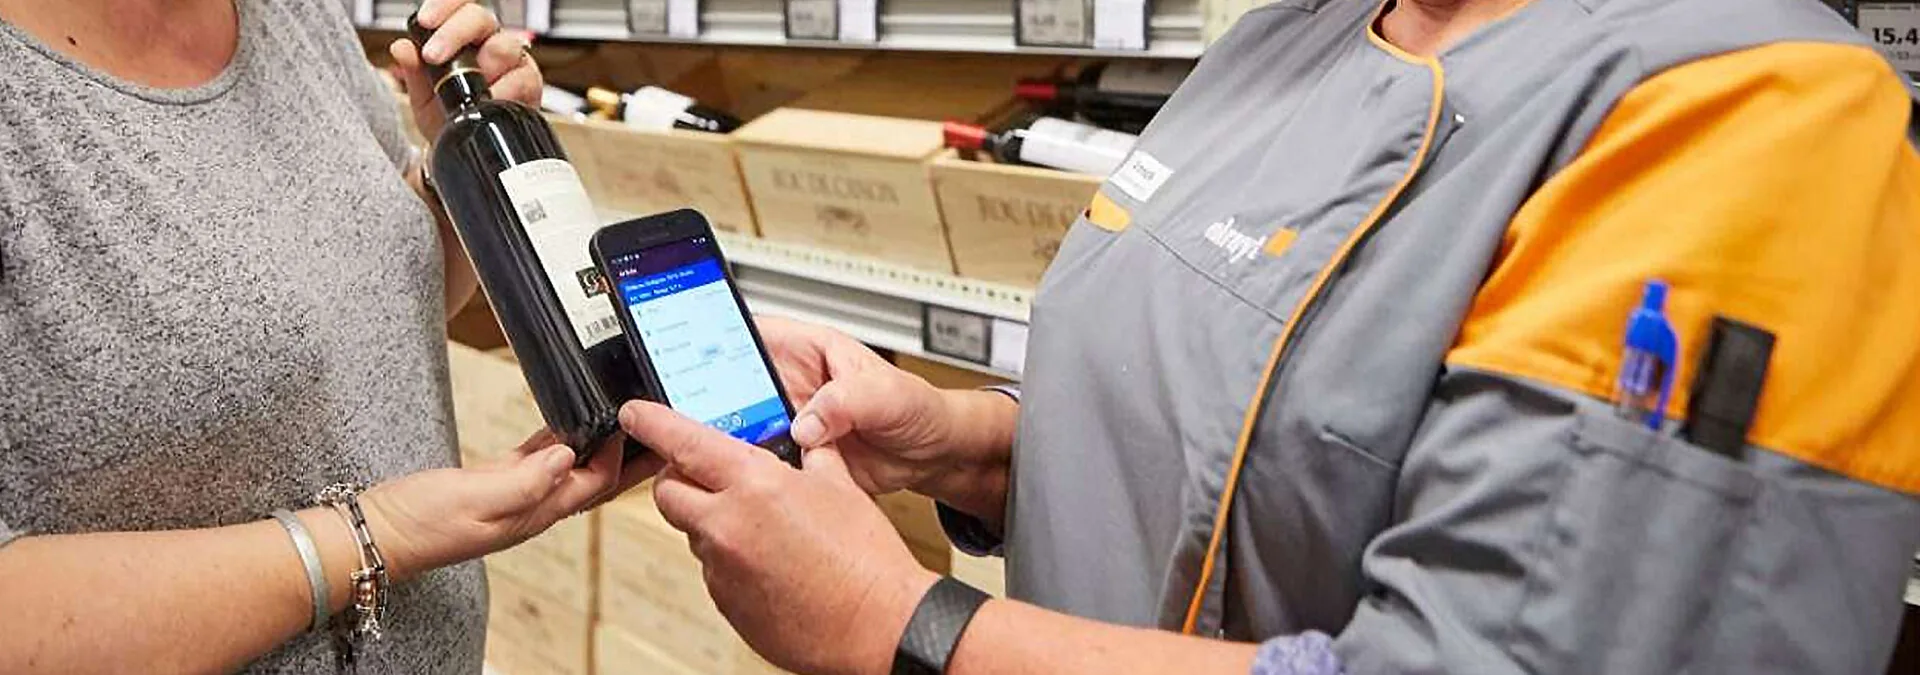 Smartphone Scanning Revolutionizes Retail Operations at Colruyt - Scandit Industrial IoT Case Study